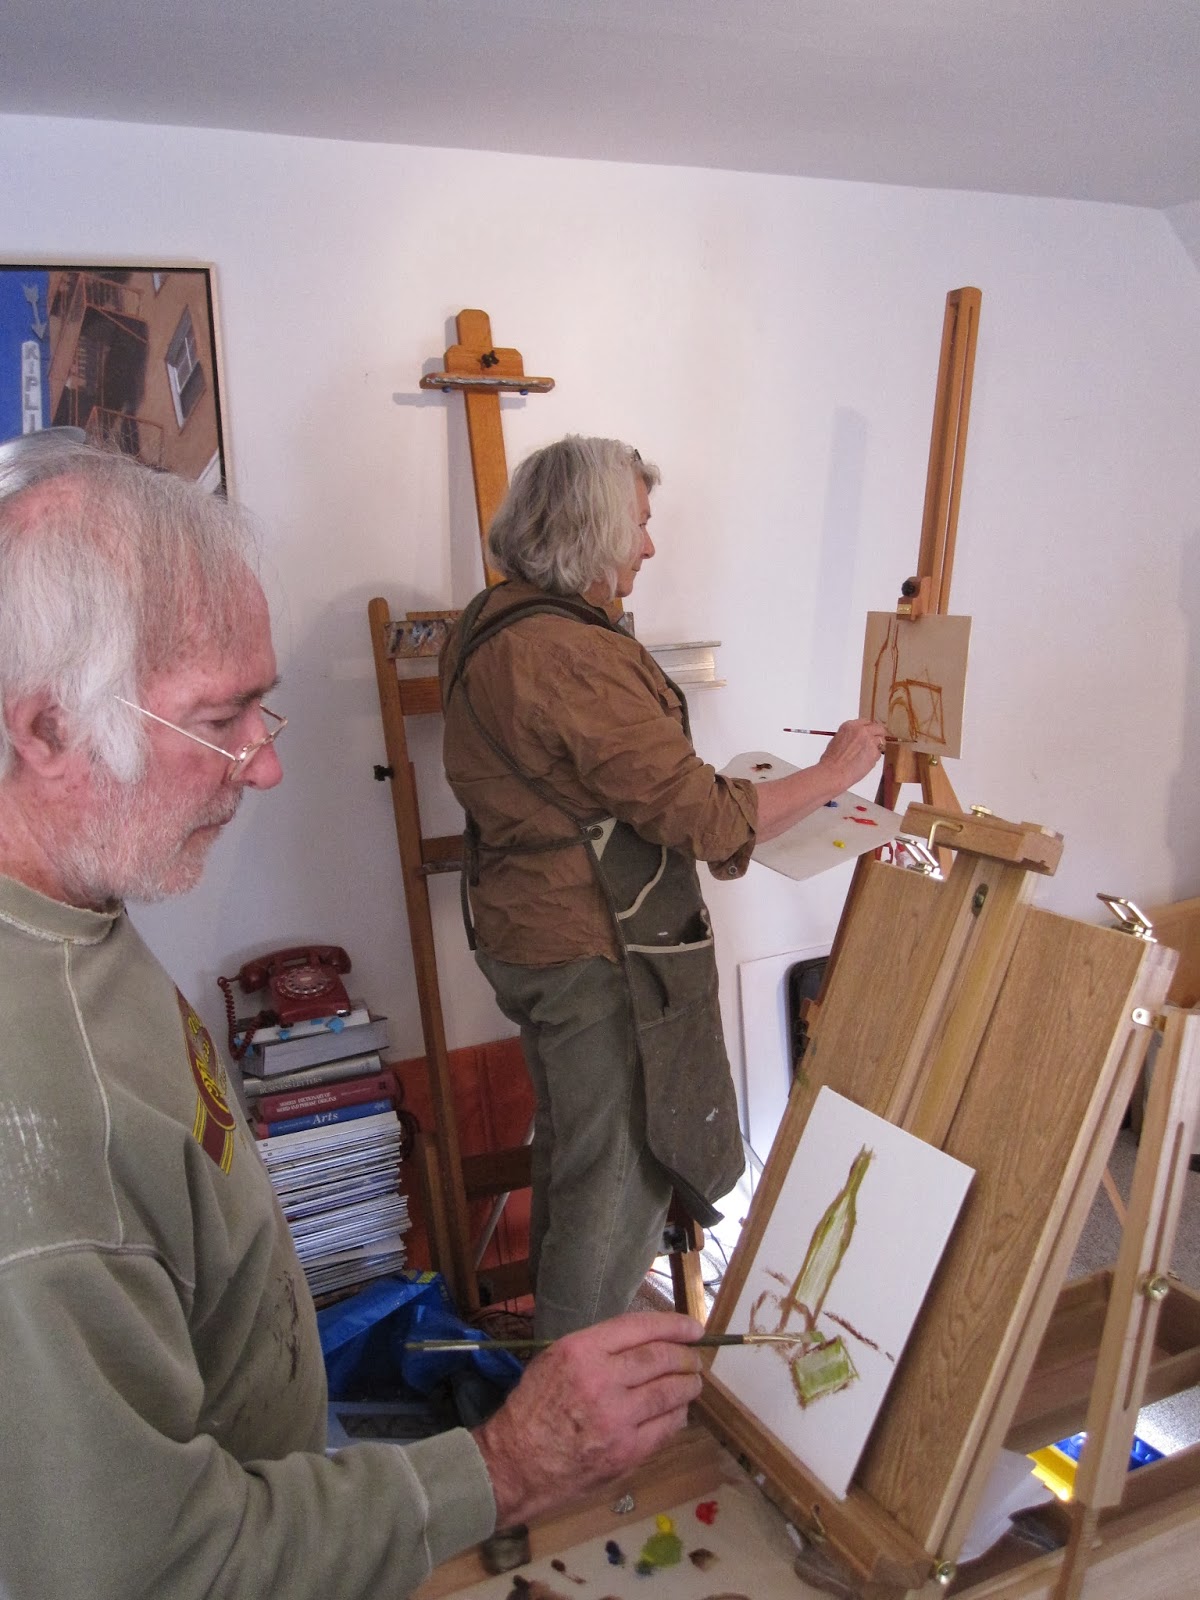 dan graziano art blog: Last Week's One-Day Oil Painting Workshop